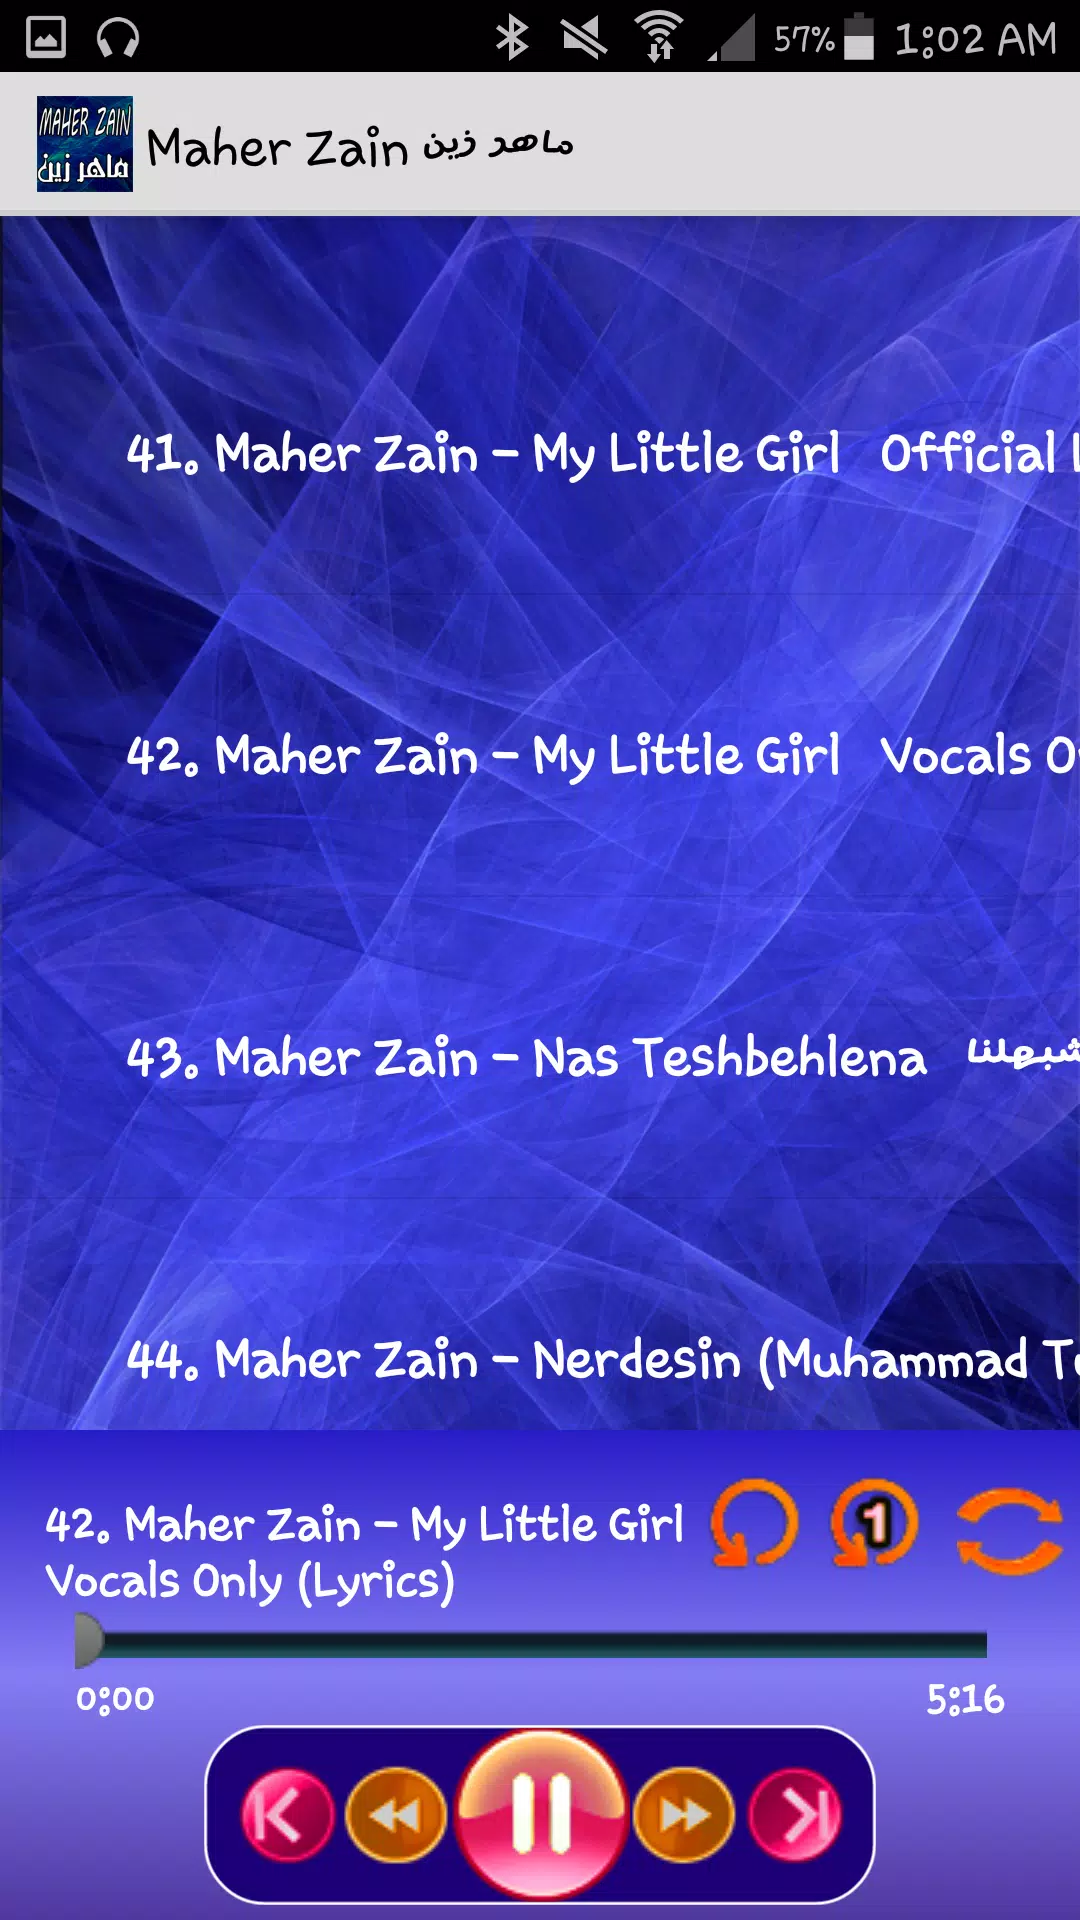 اناشيد ماهر زين Maher Zain mp3 APK for Android Download